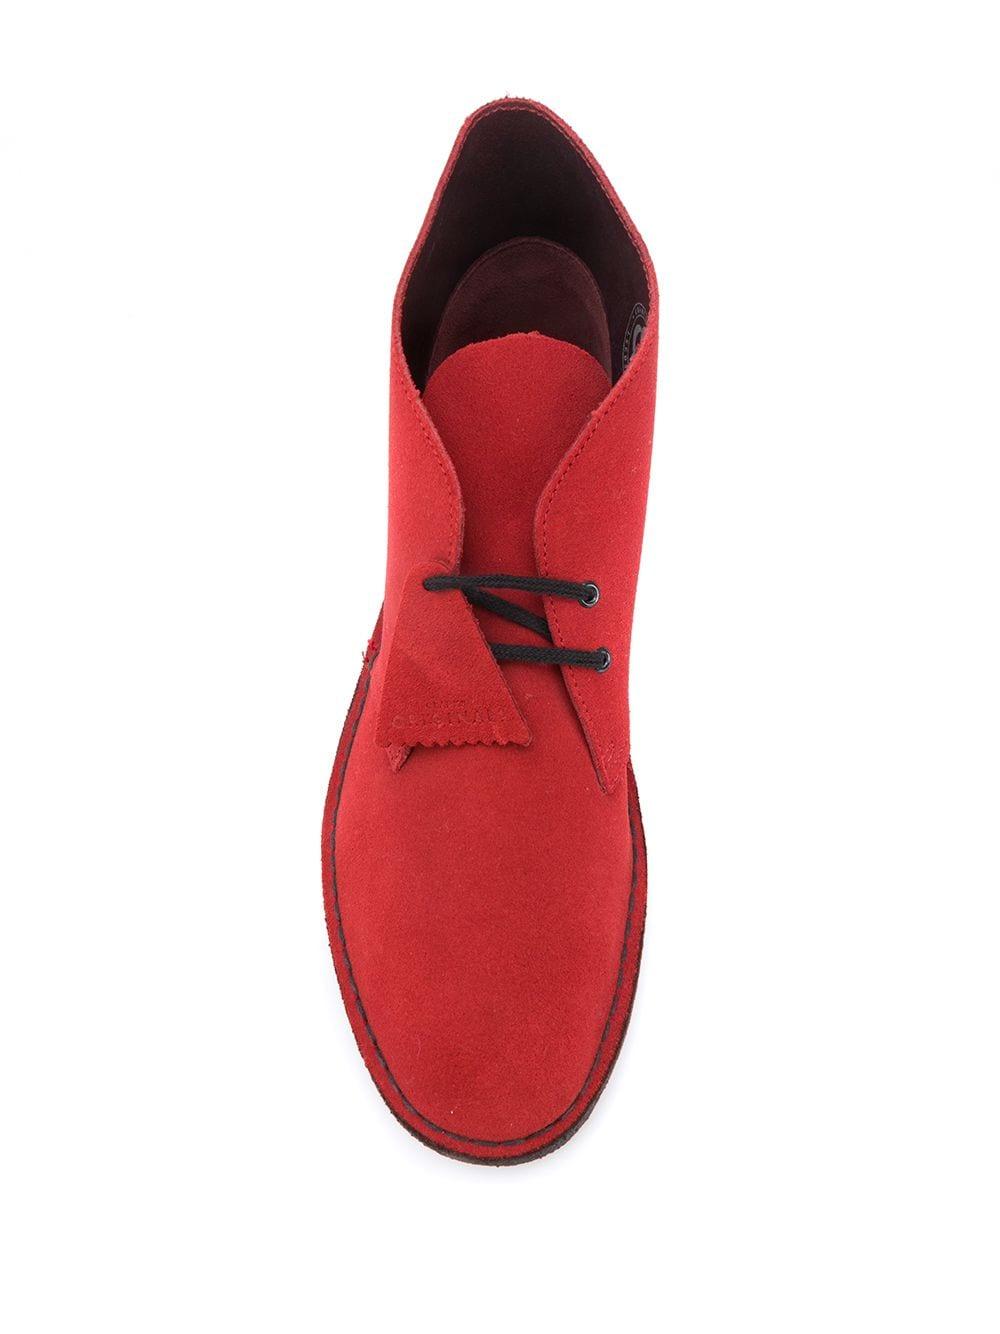 Clarks Brandy Suede Desert Boots in Red for Men | Lyst